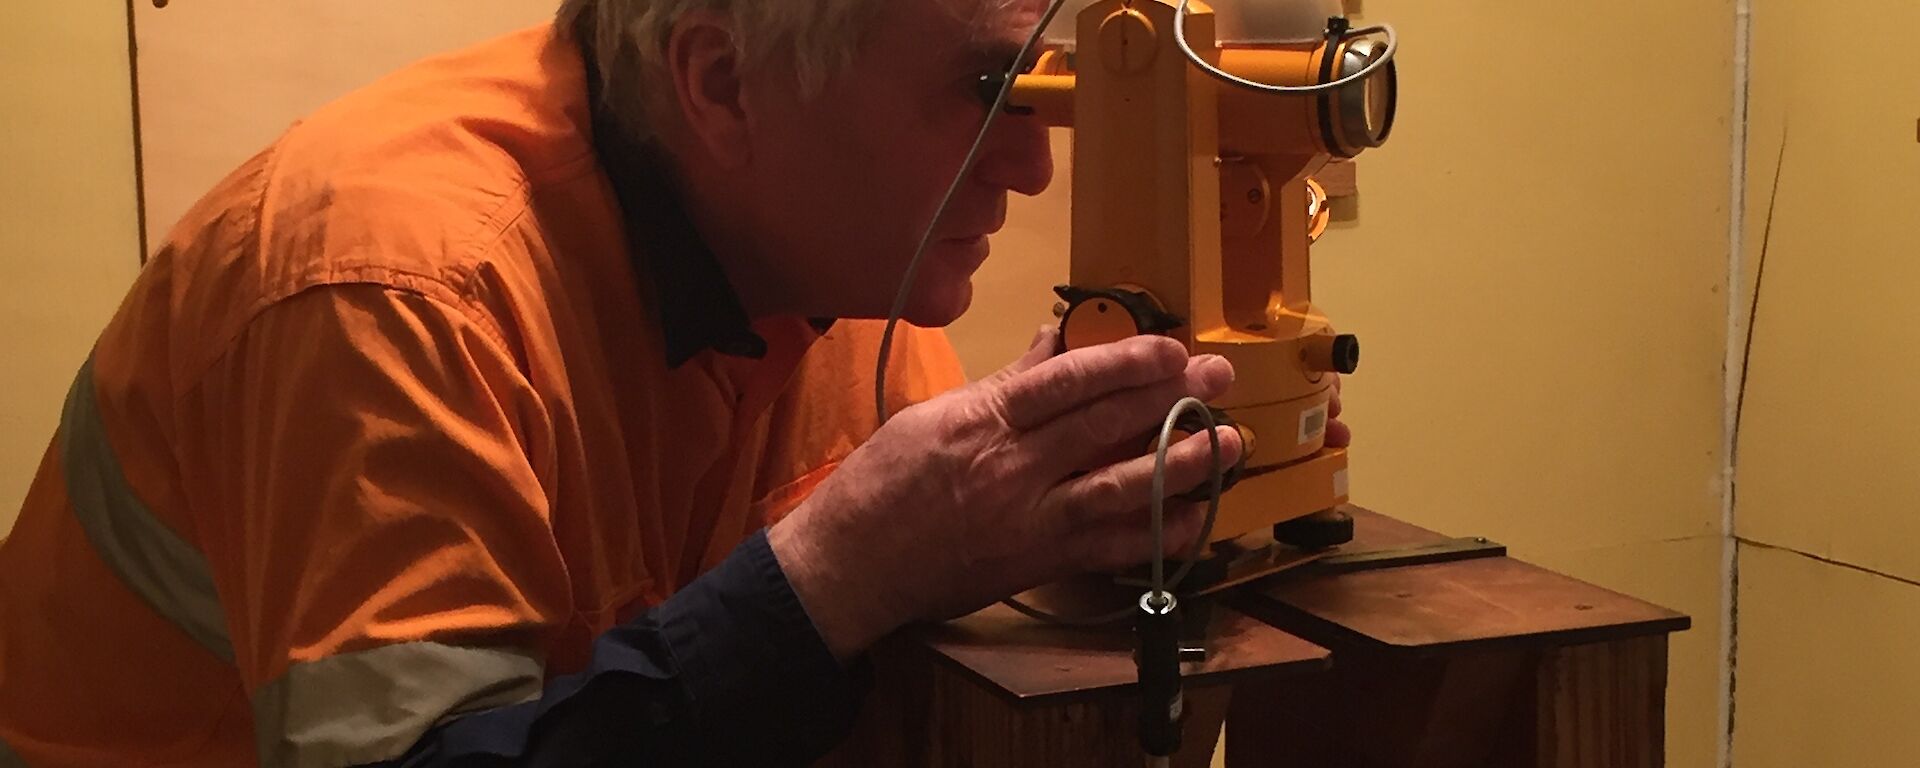 A man looking through a binocular like instrument